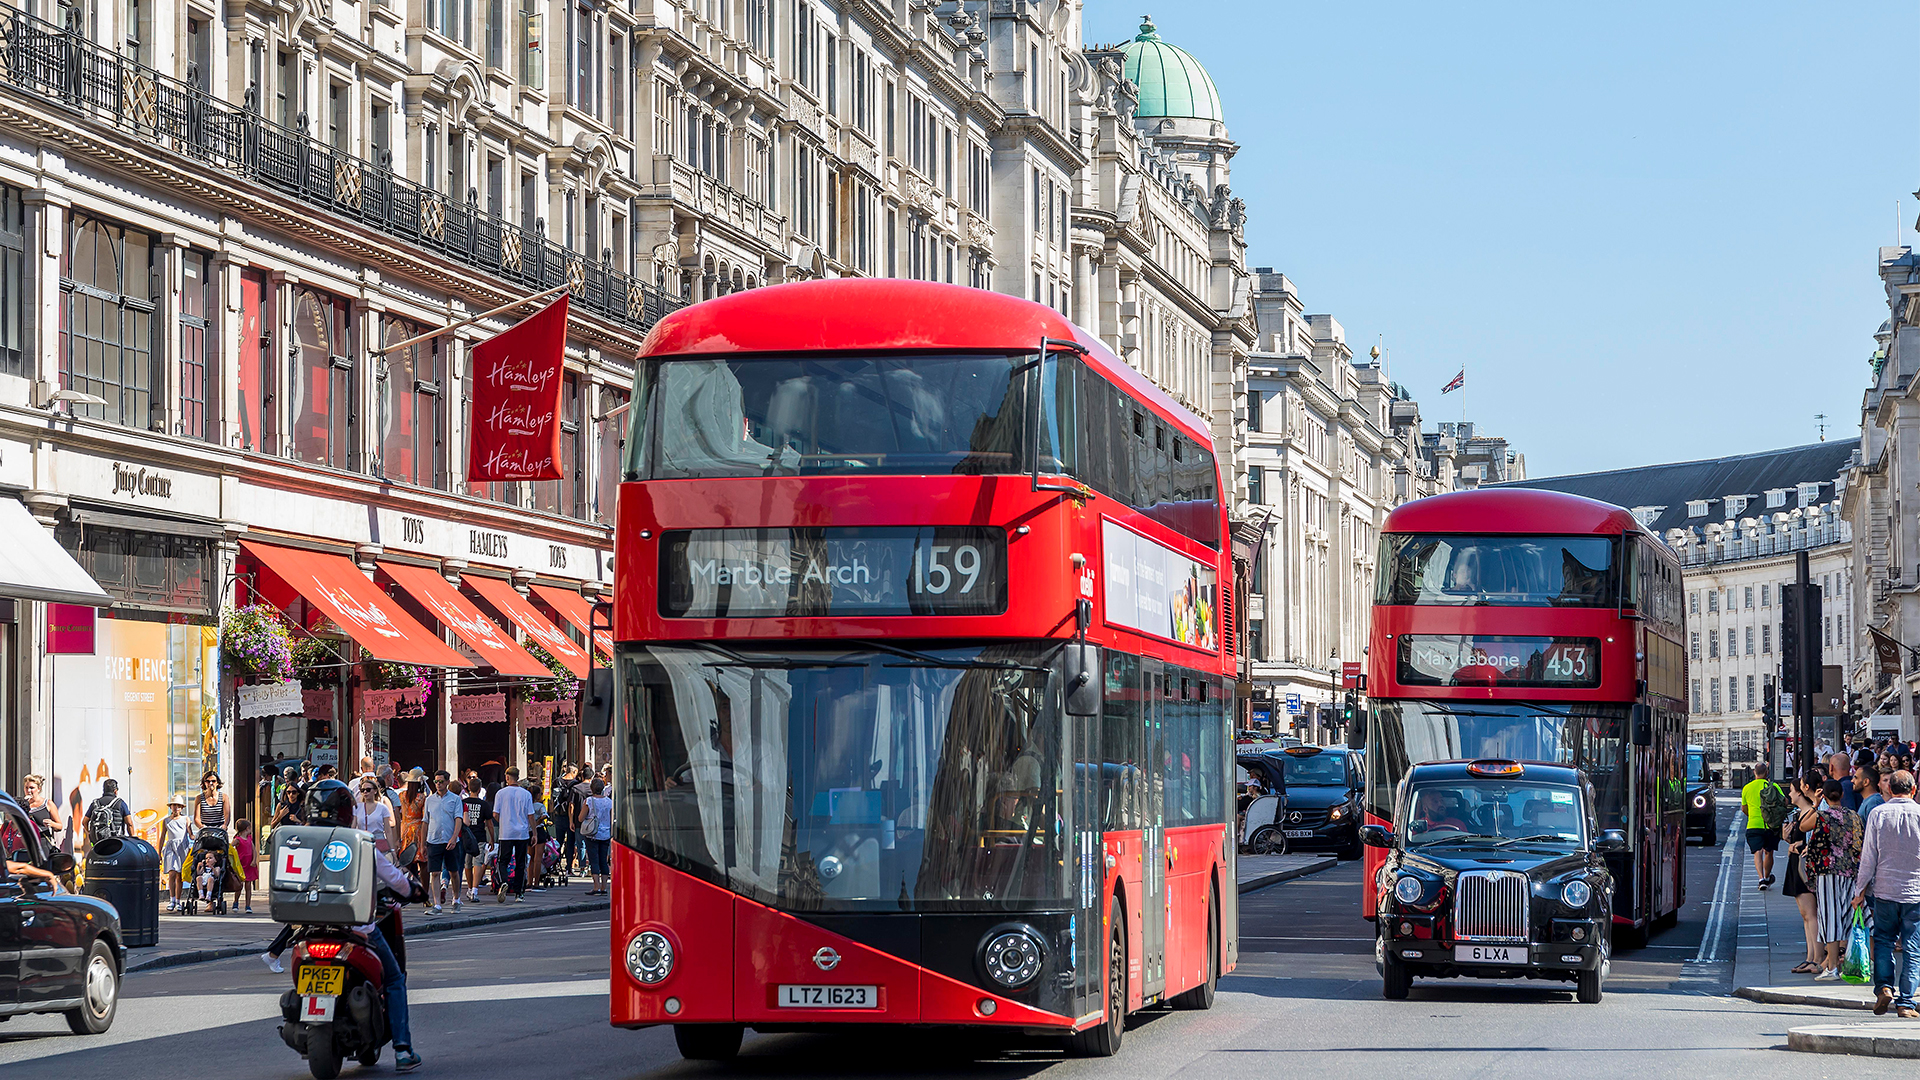 Doppeldeckerbusse in London | picture alliance / imageBROKER